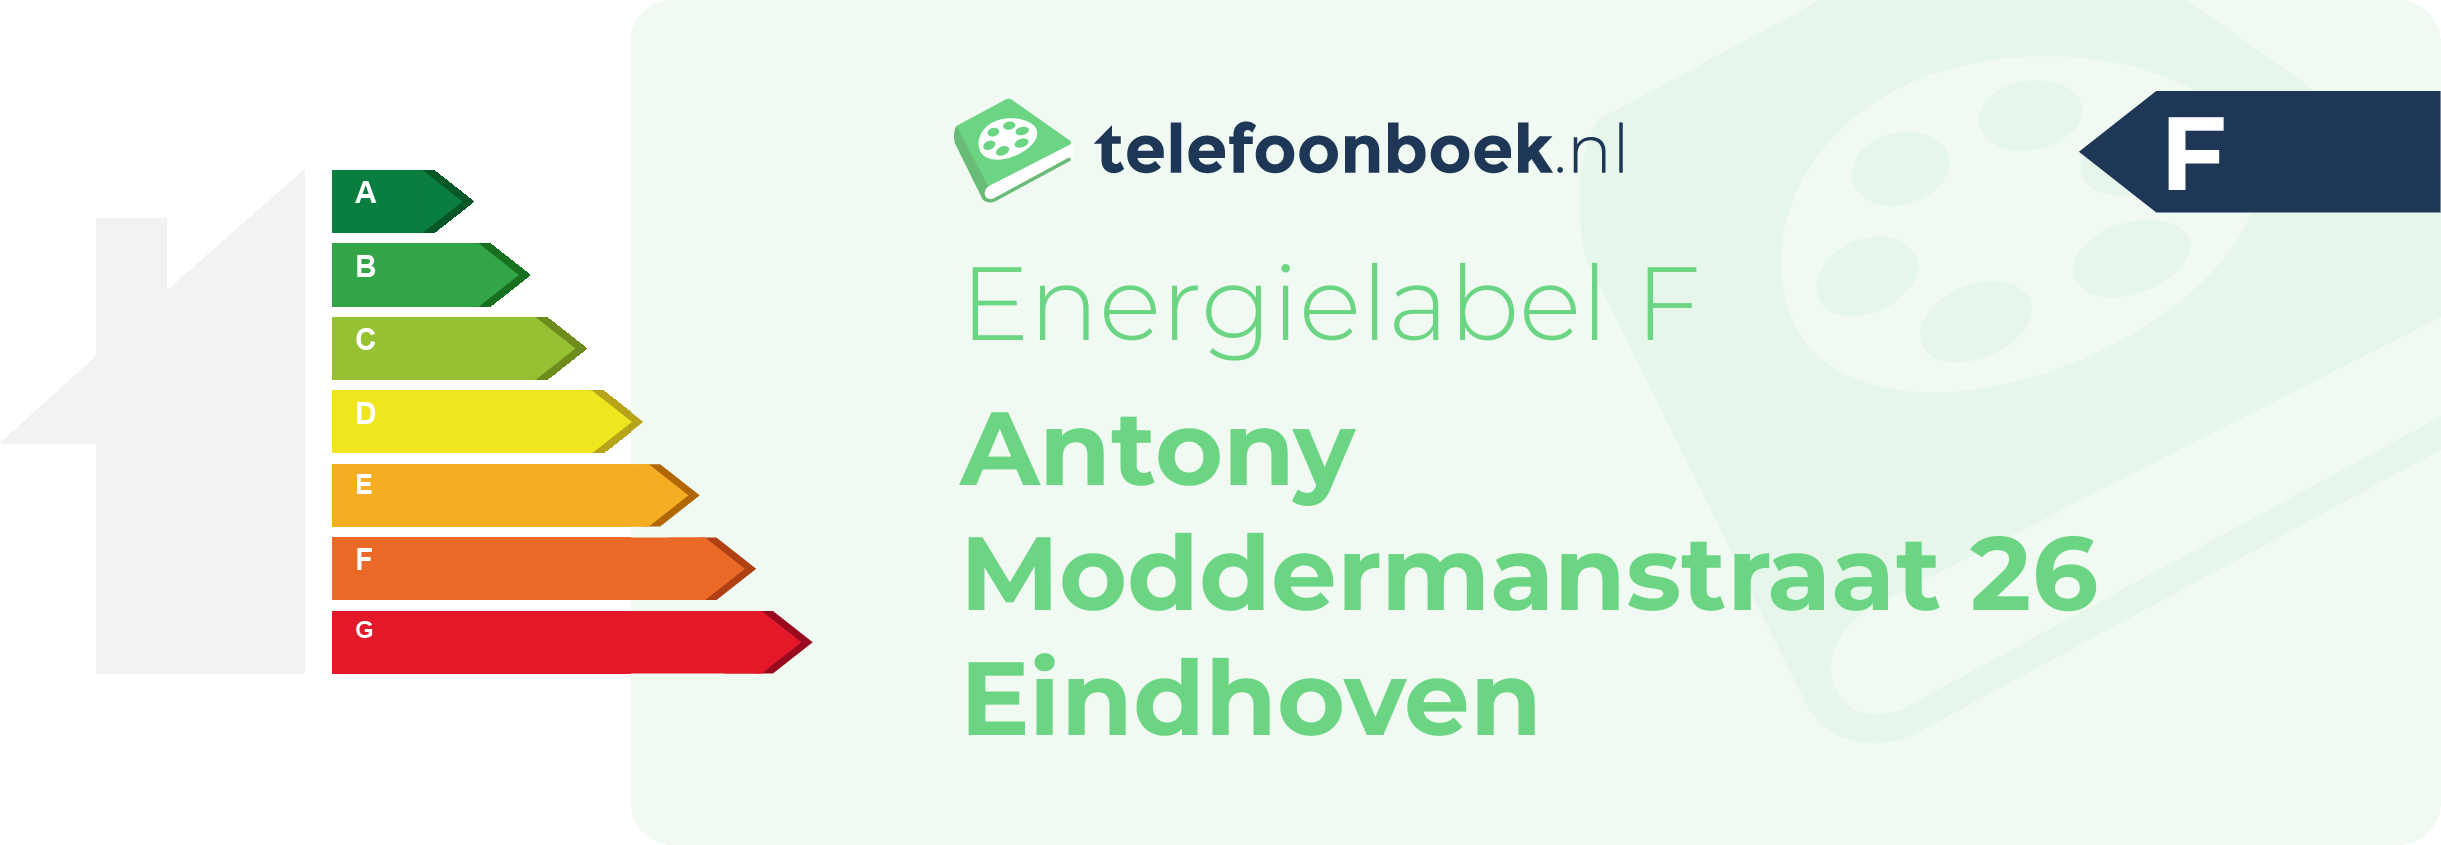 Energielabel Antony Moddermanstraat 26 Eindhoven